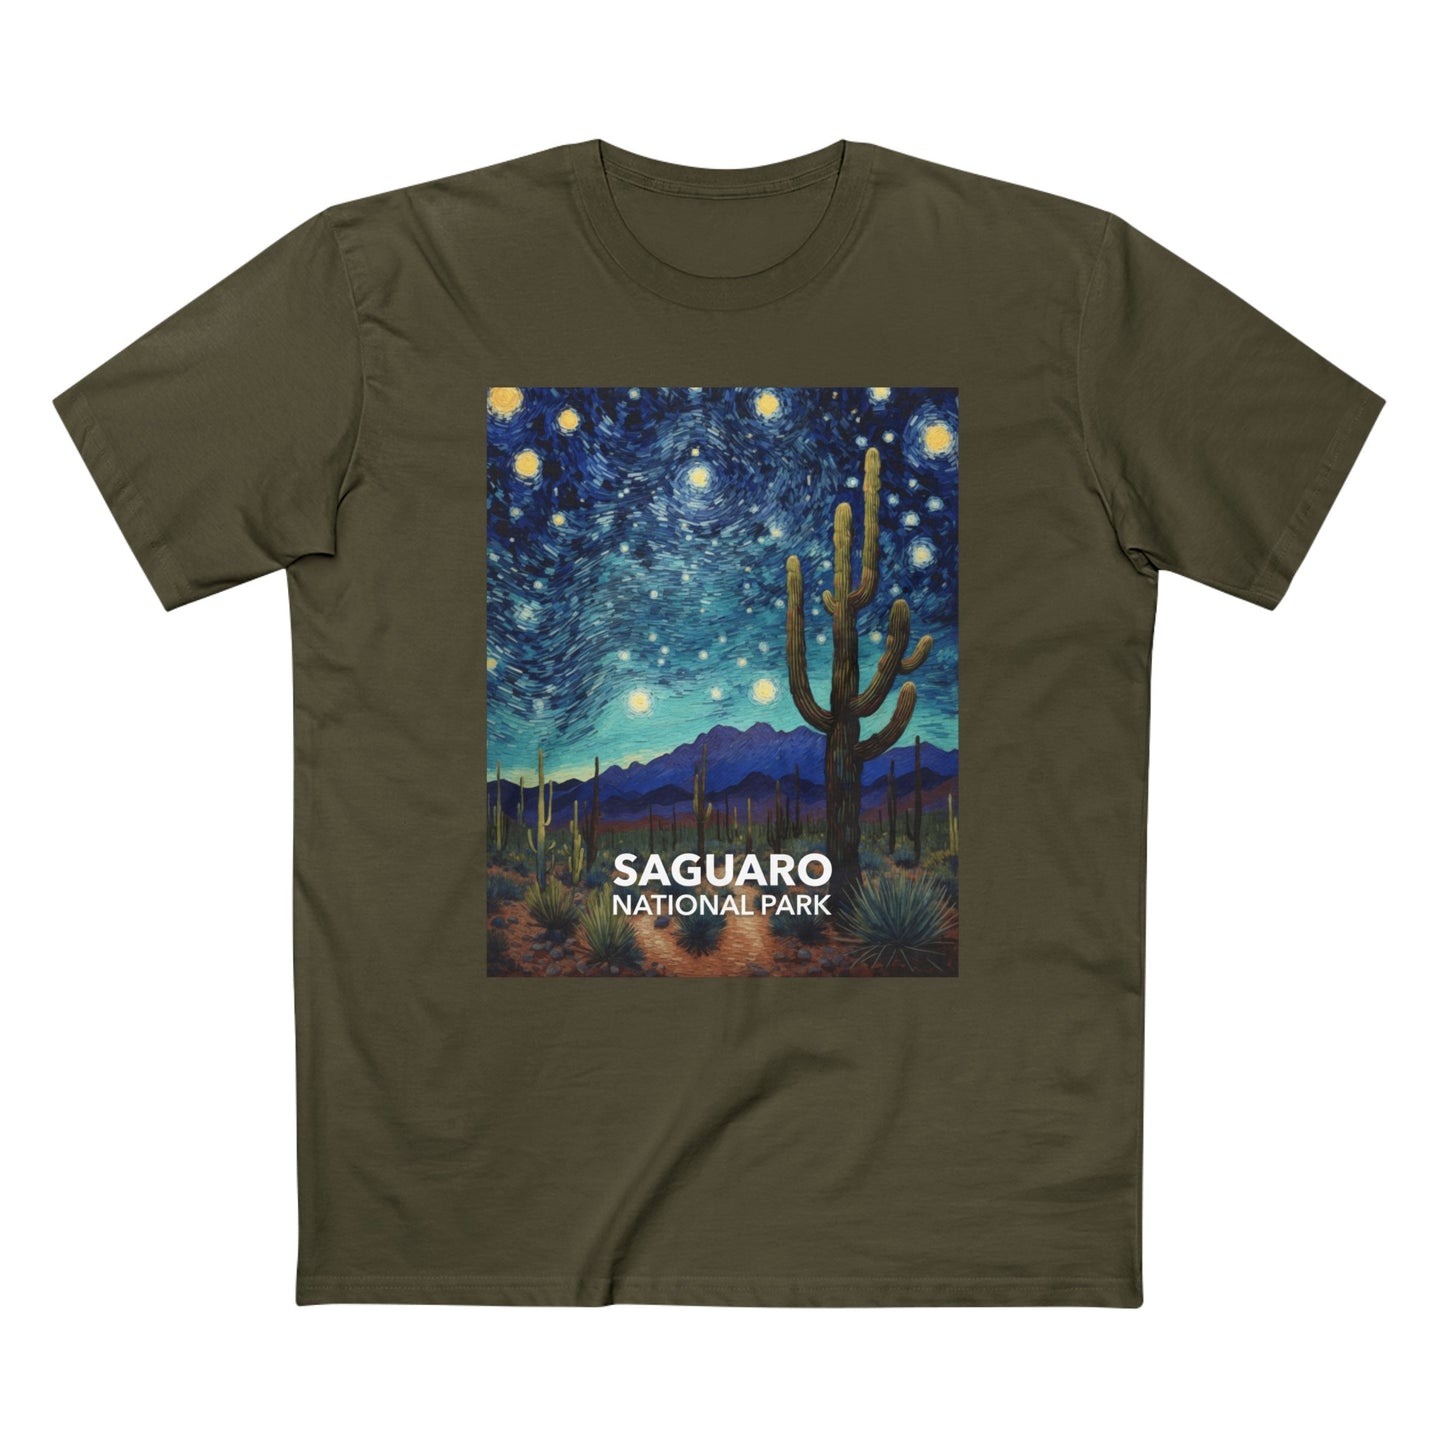 Saguaro National Park T-Shirt - The Starry Night